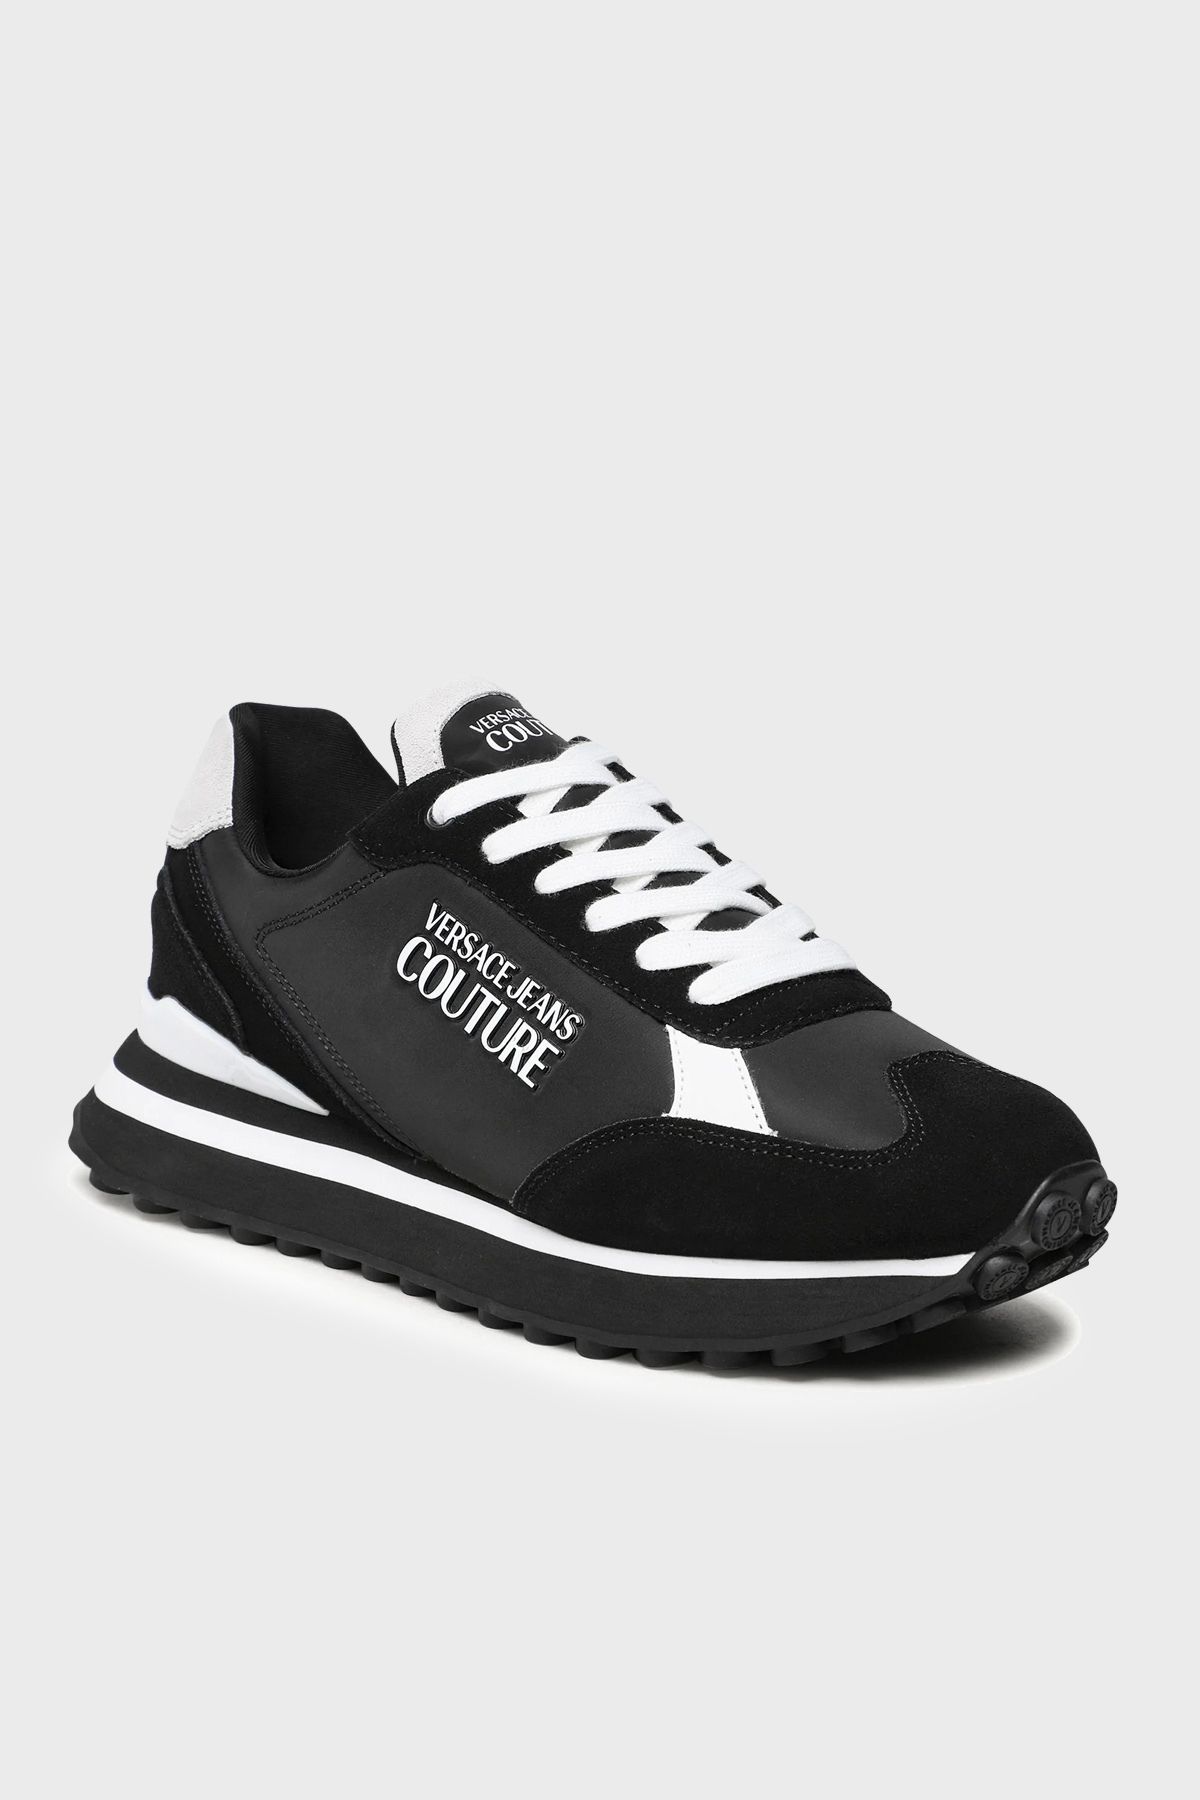 VERSACE JEANS COUTURE Logolu Deri Sneaker Ayakkabı Erkek Ayakkabı 74ya3se2 Zp076 L01